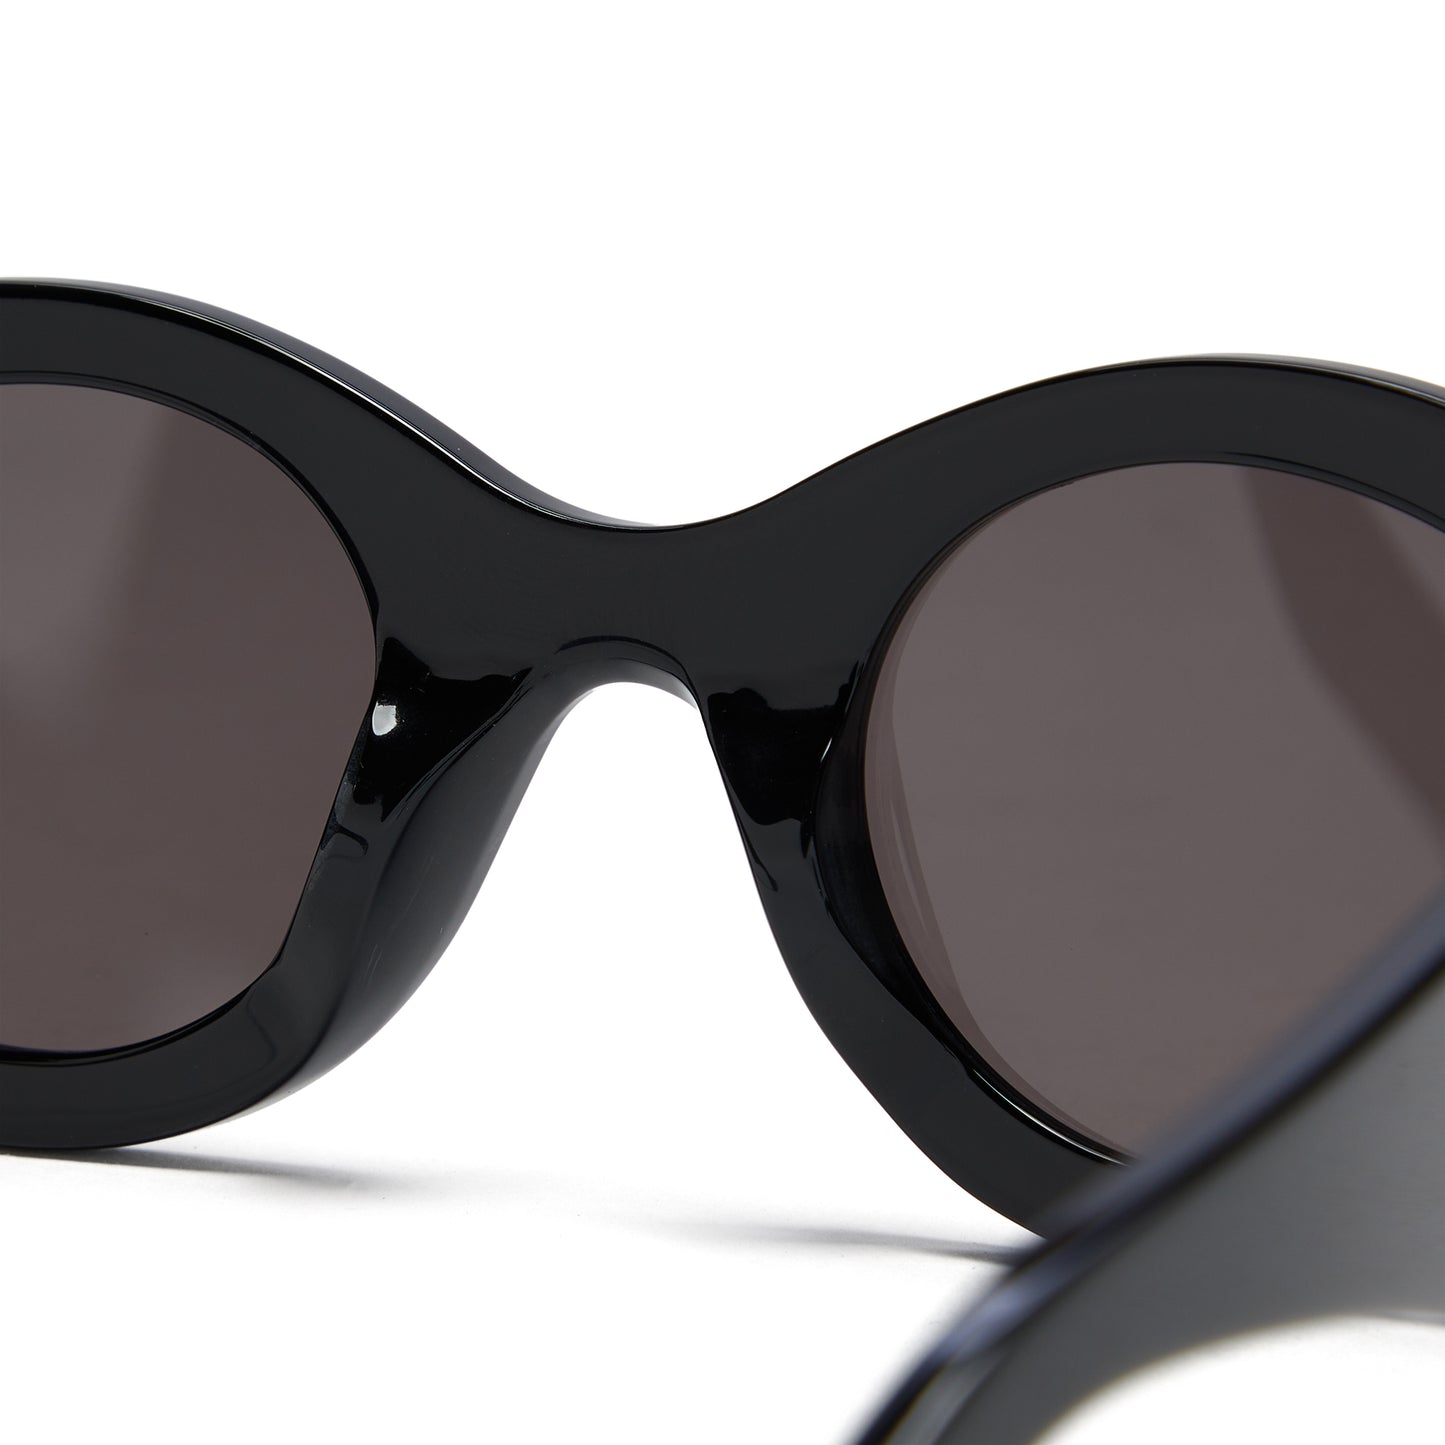 Alaia Elongated Acetate Round Sunglasses (Black/Grey)